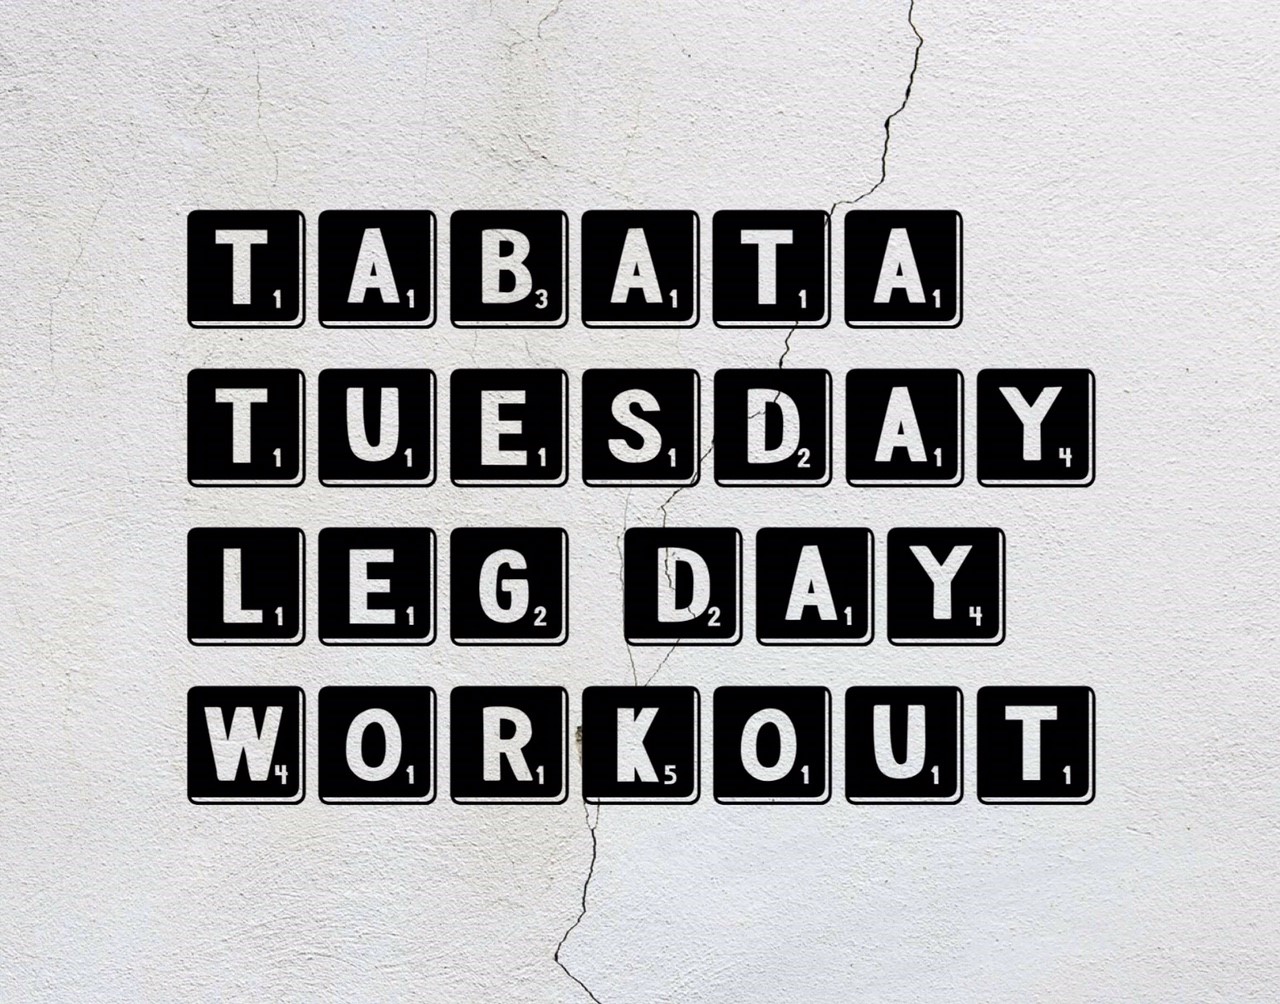 Tabata tuesday - Leg day!